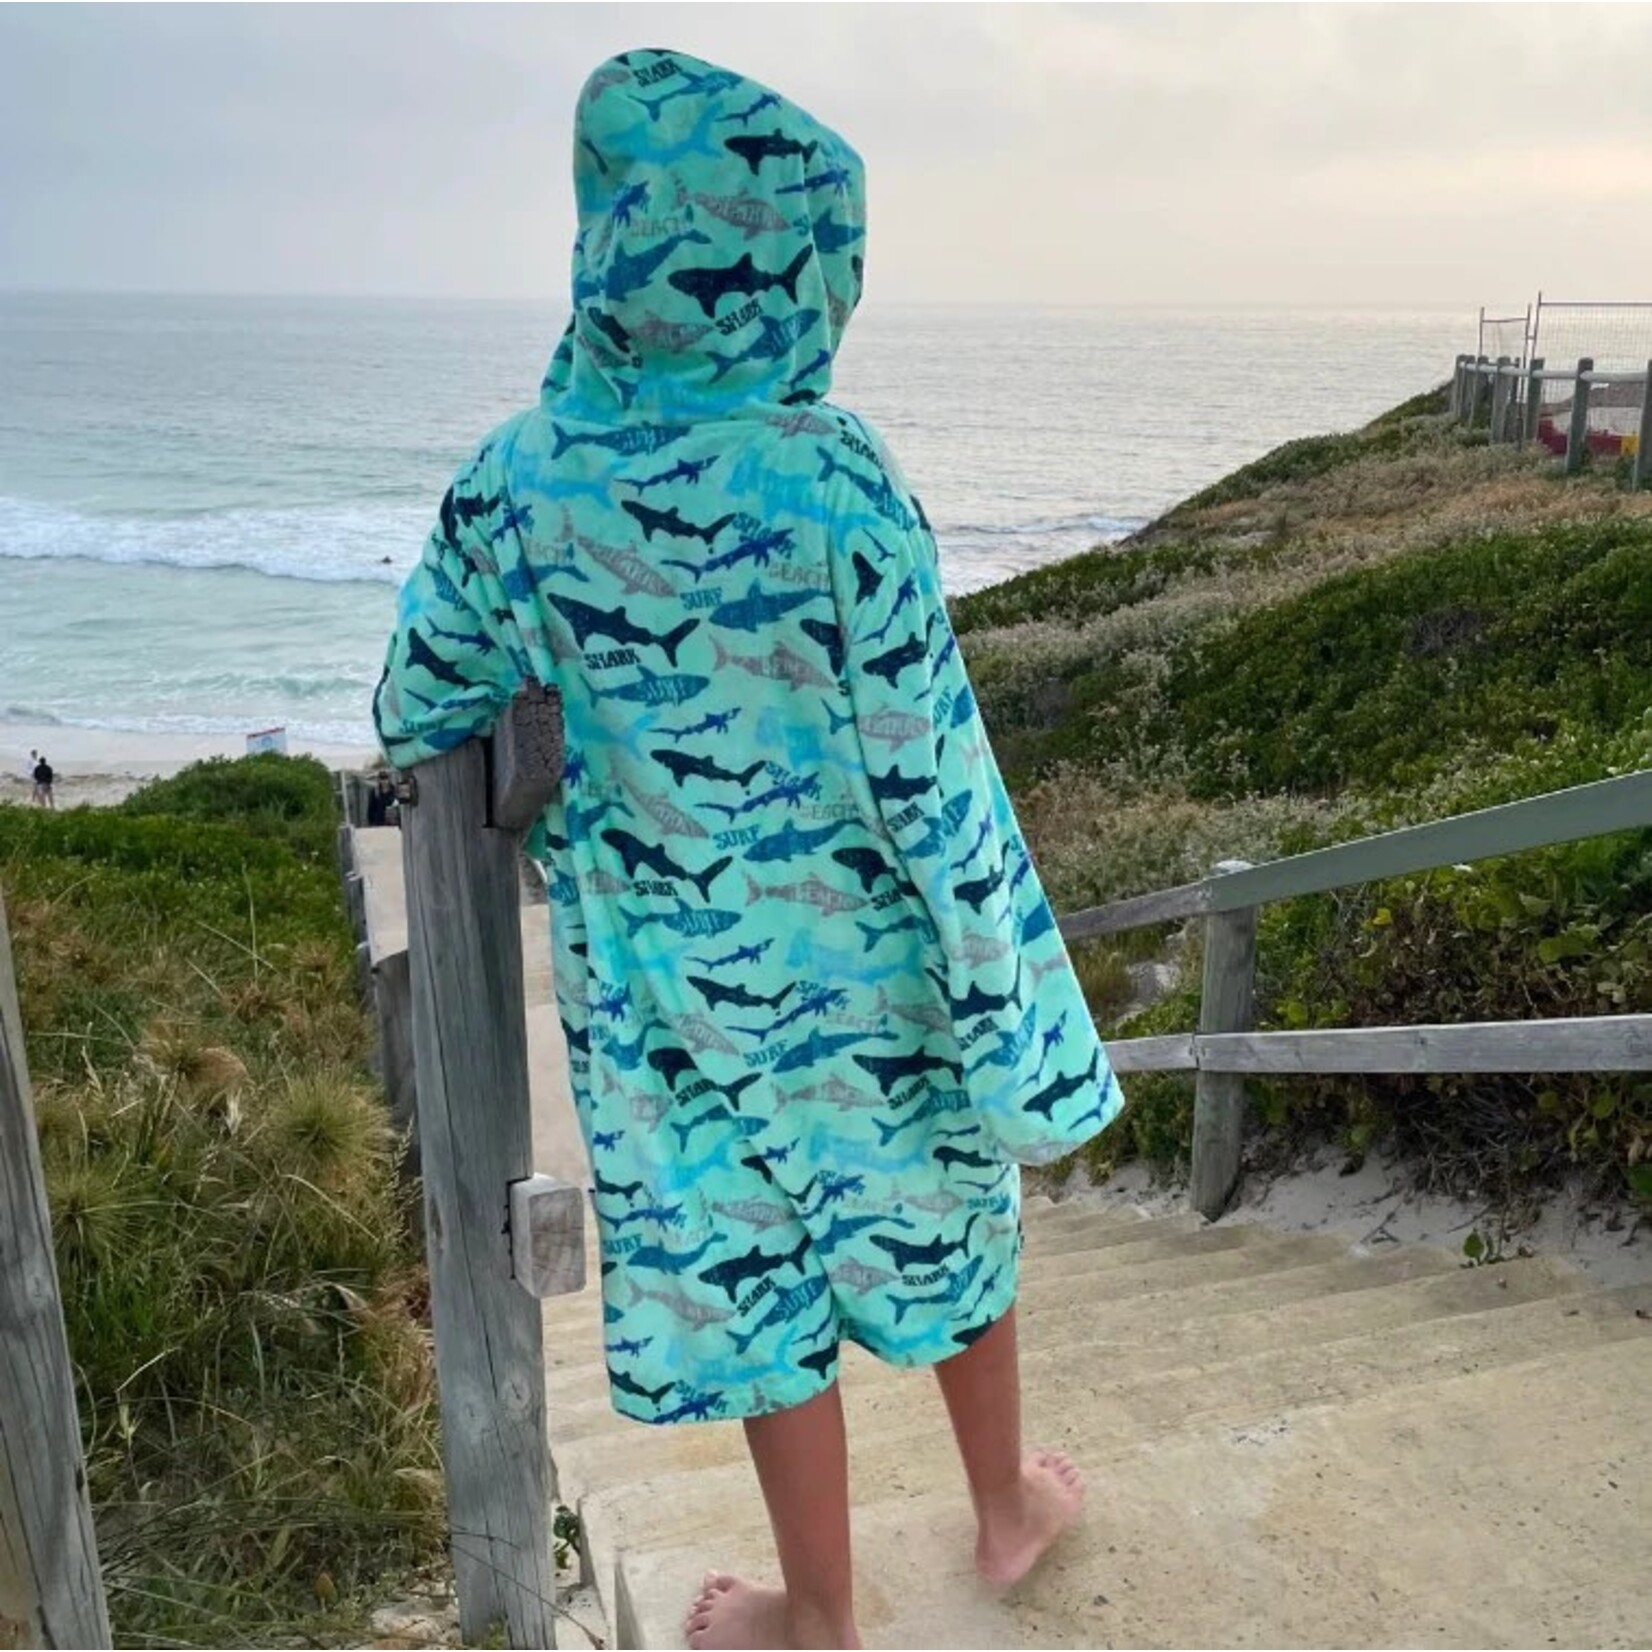 Back Beach Co Luxe Towel Robe Sharky